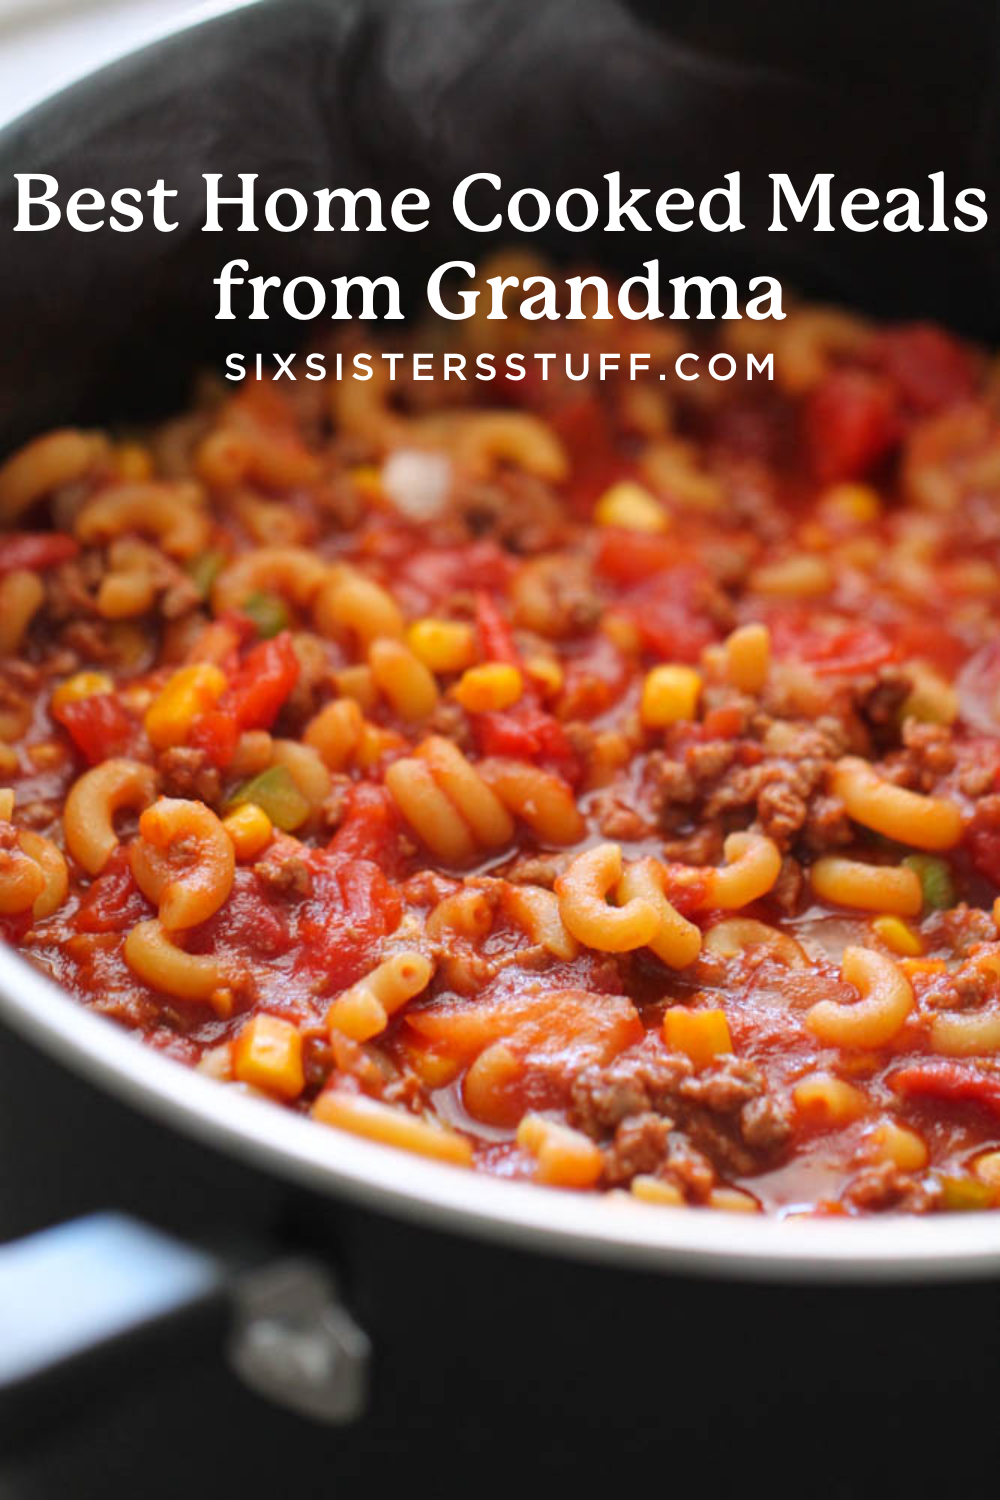 Best Home Cooked Meals from Grandma – In Memory of Grandma Virginia.